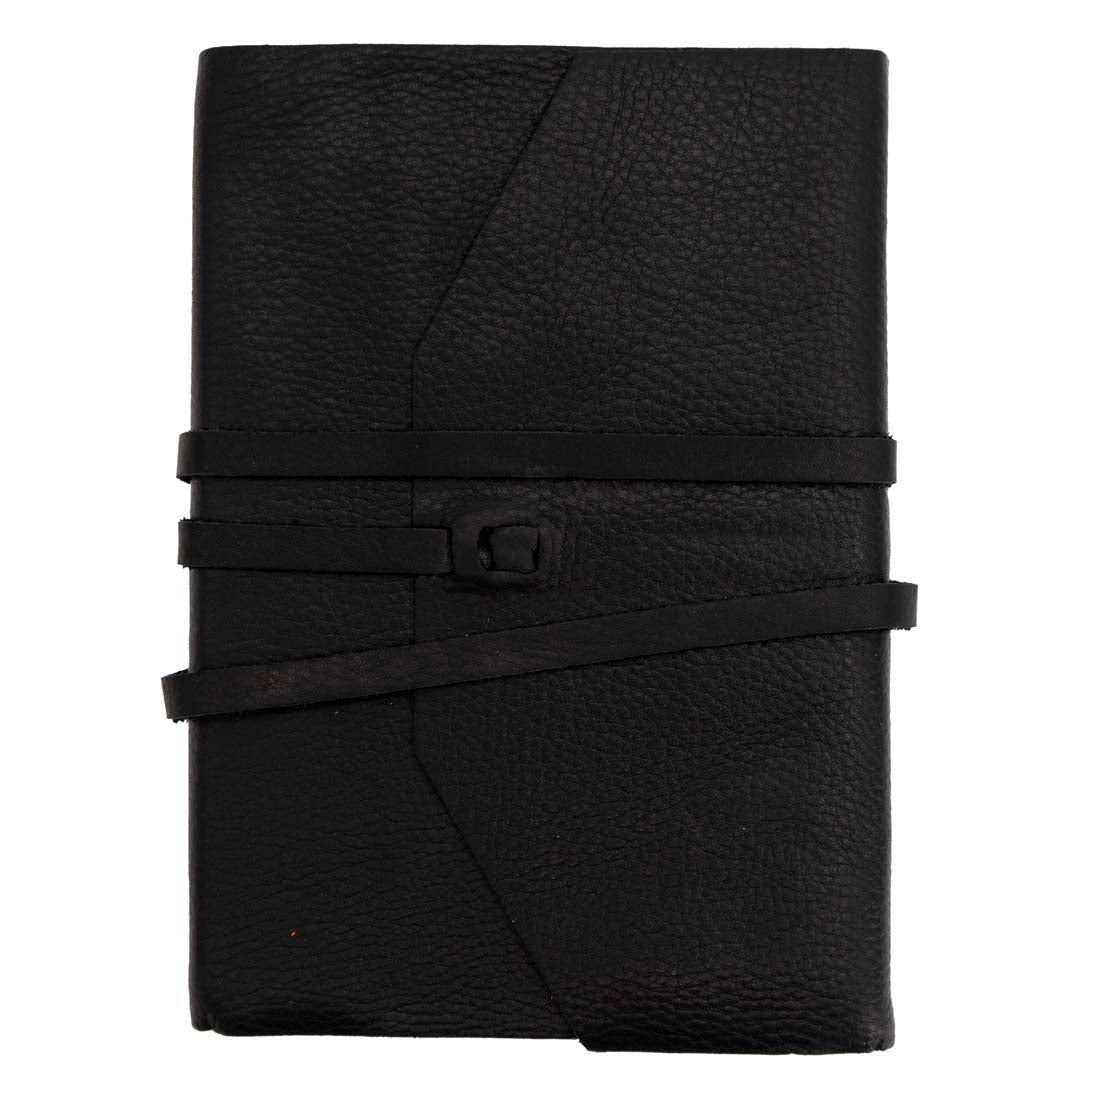 Black Leather Wrap Journal